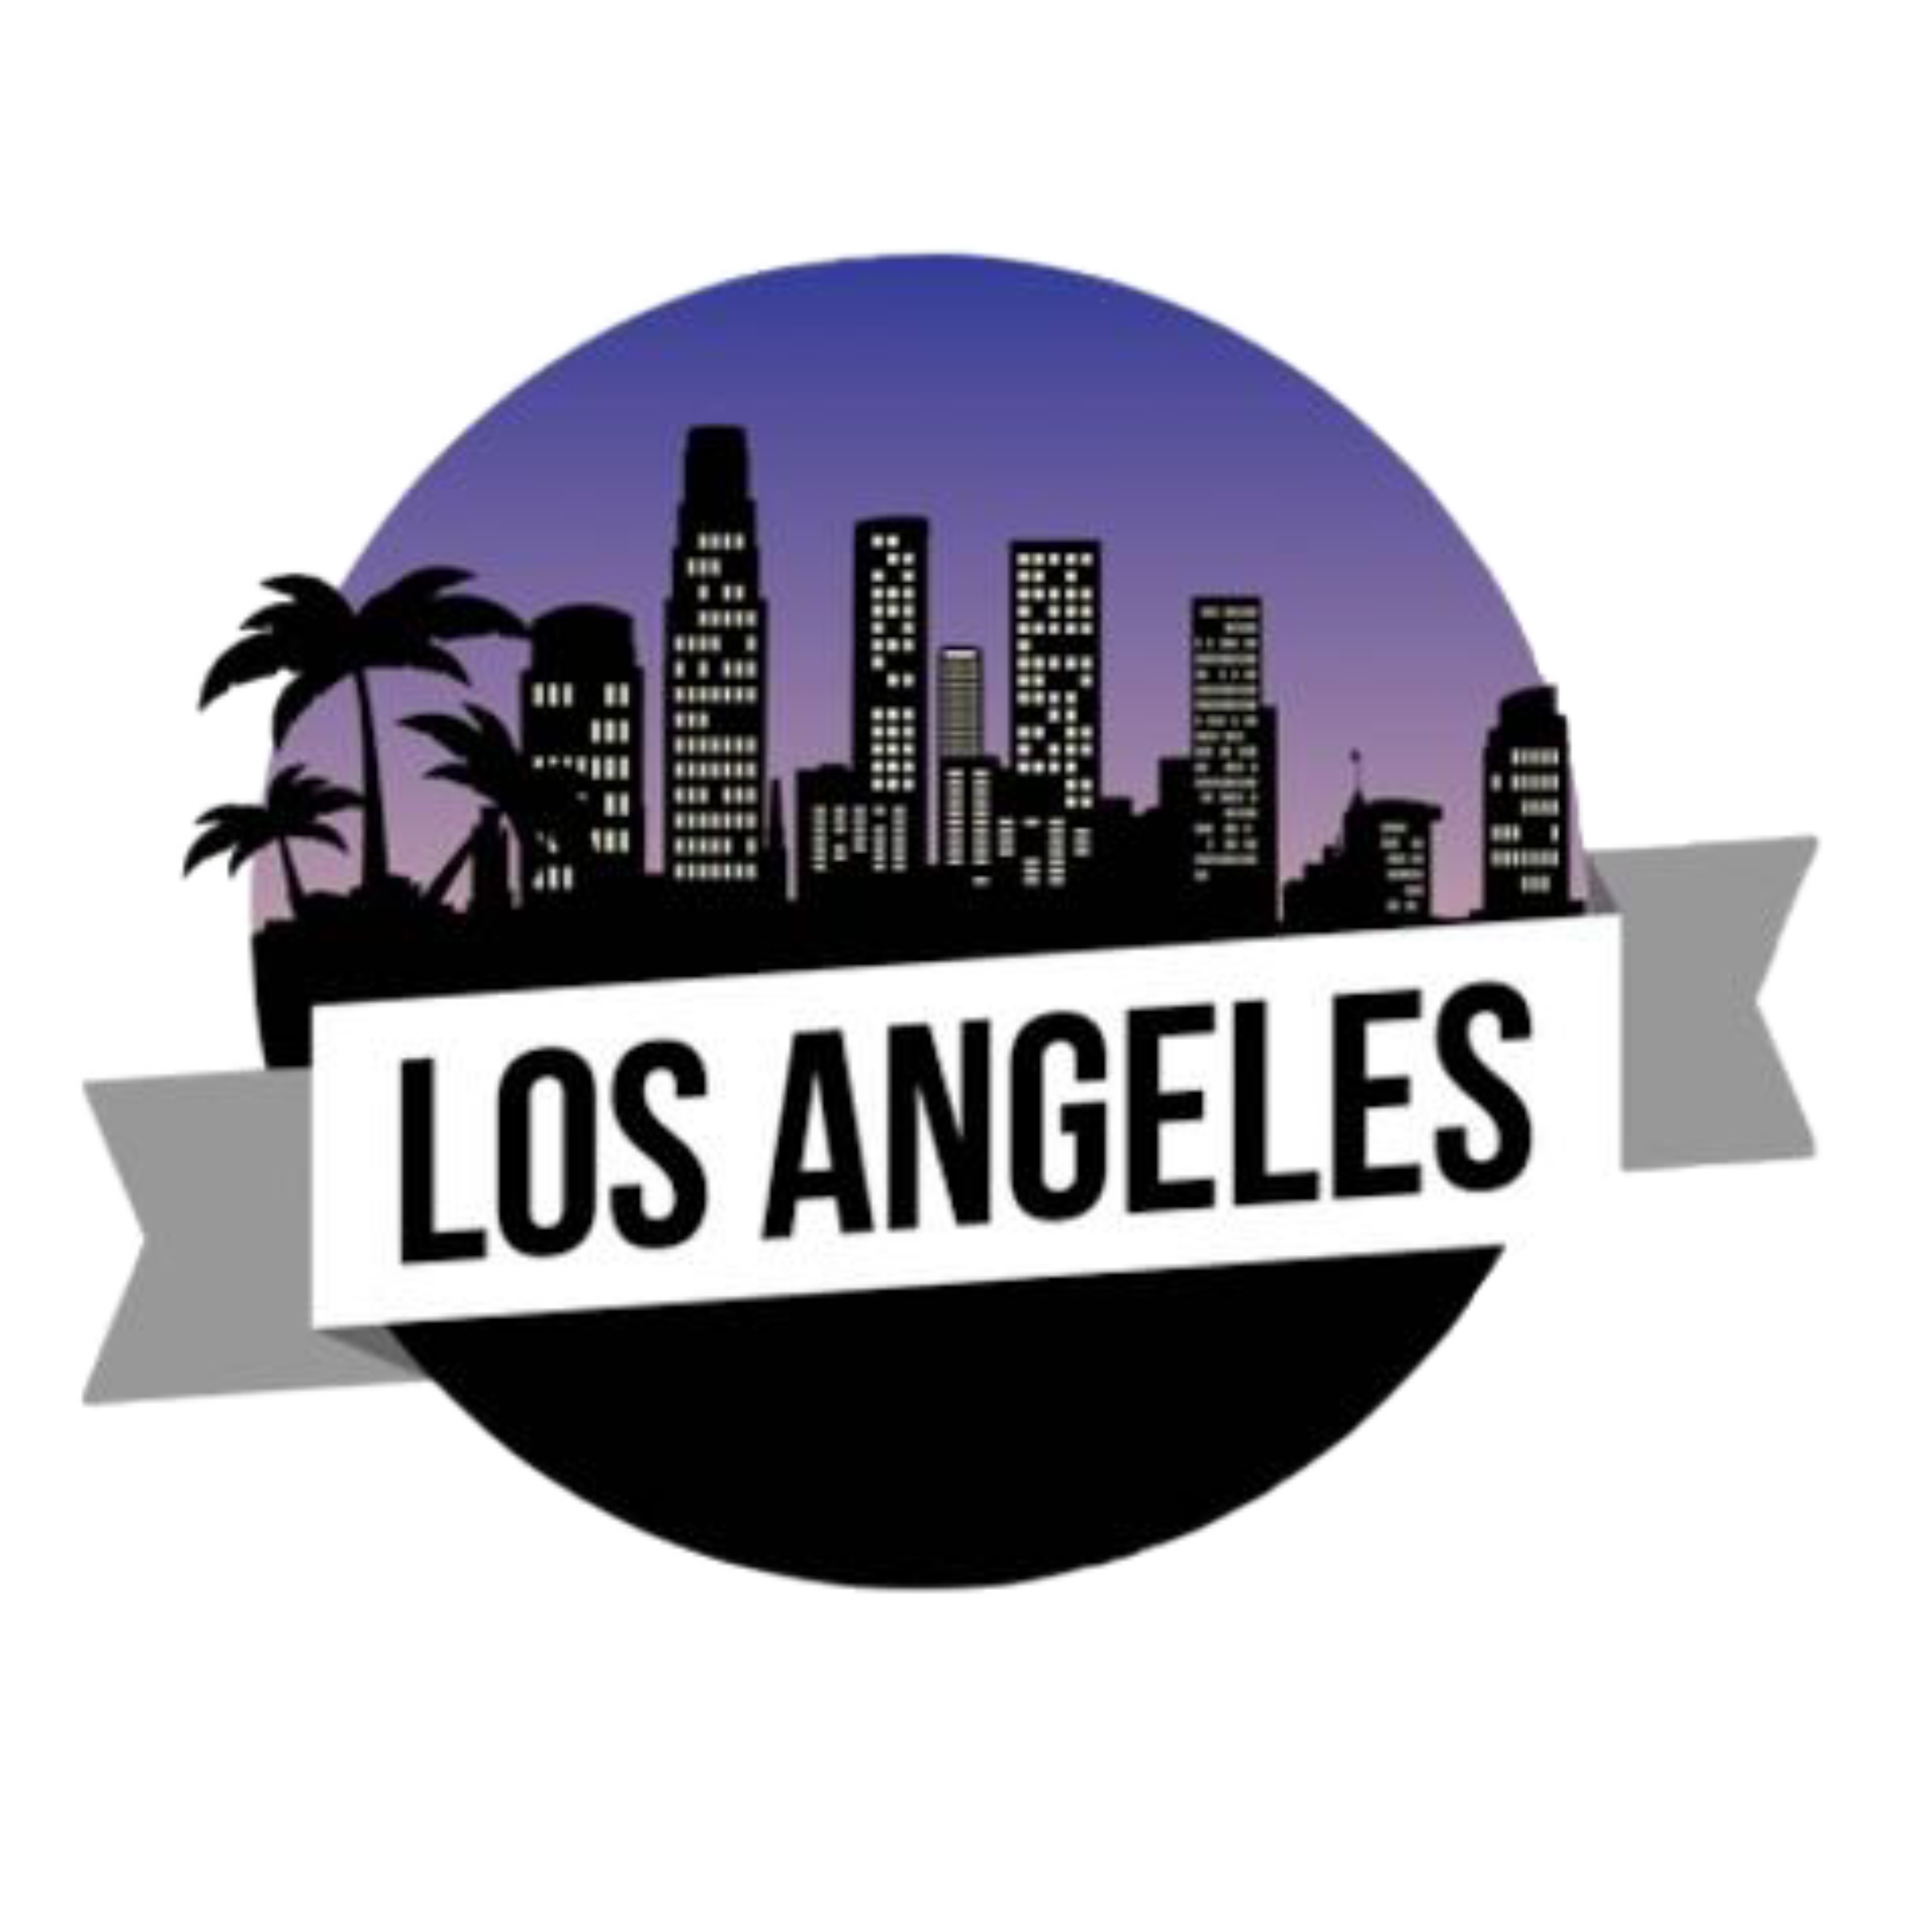 Los angeles 52 текст. Лос-Анджелес. Los Angeles надпись. La Лос Анджелес. Los Angeles логотип la.